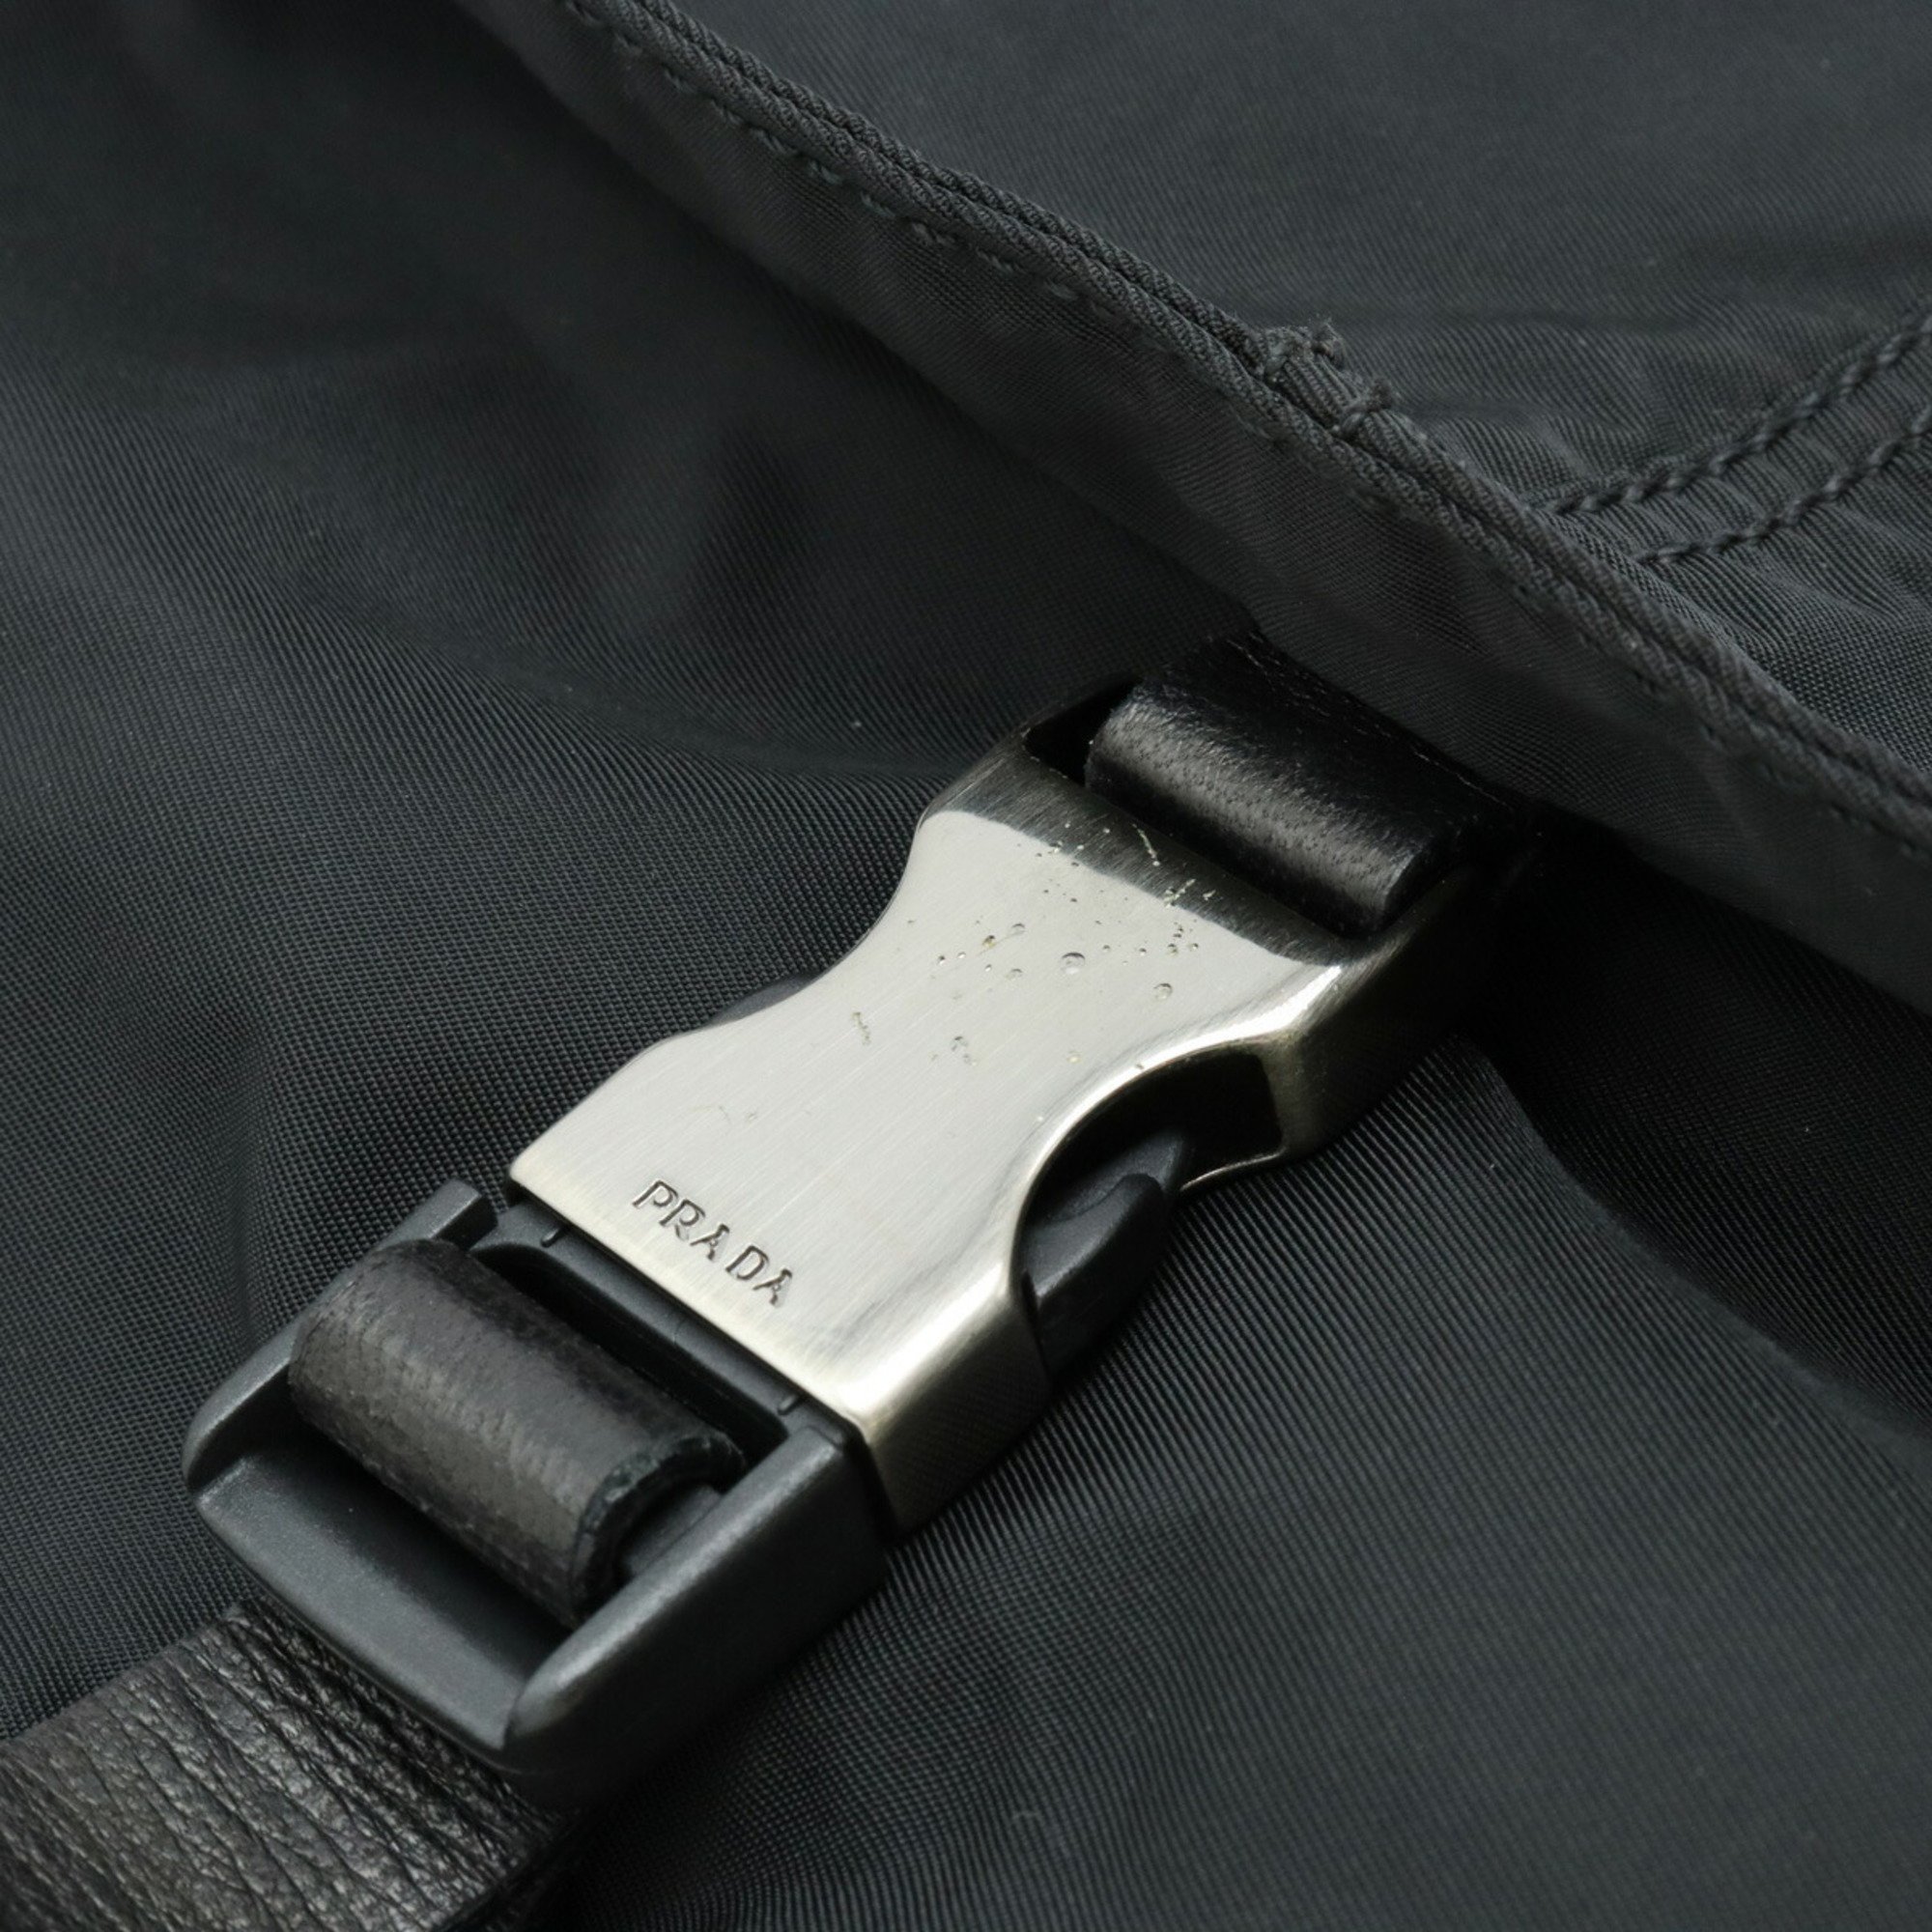 PRADA Prada Shoulder Bag Nylon Leather NERO Black Purchased at an overseas duty-free shop VA0144